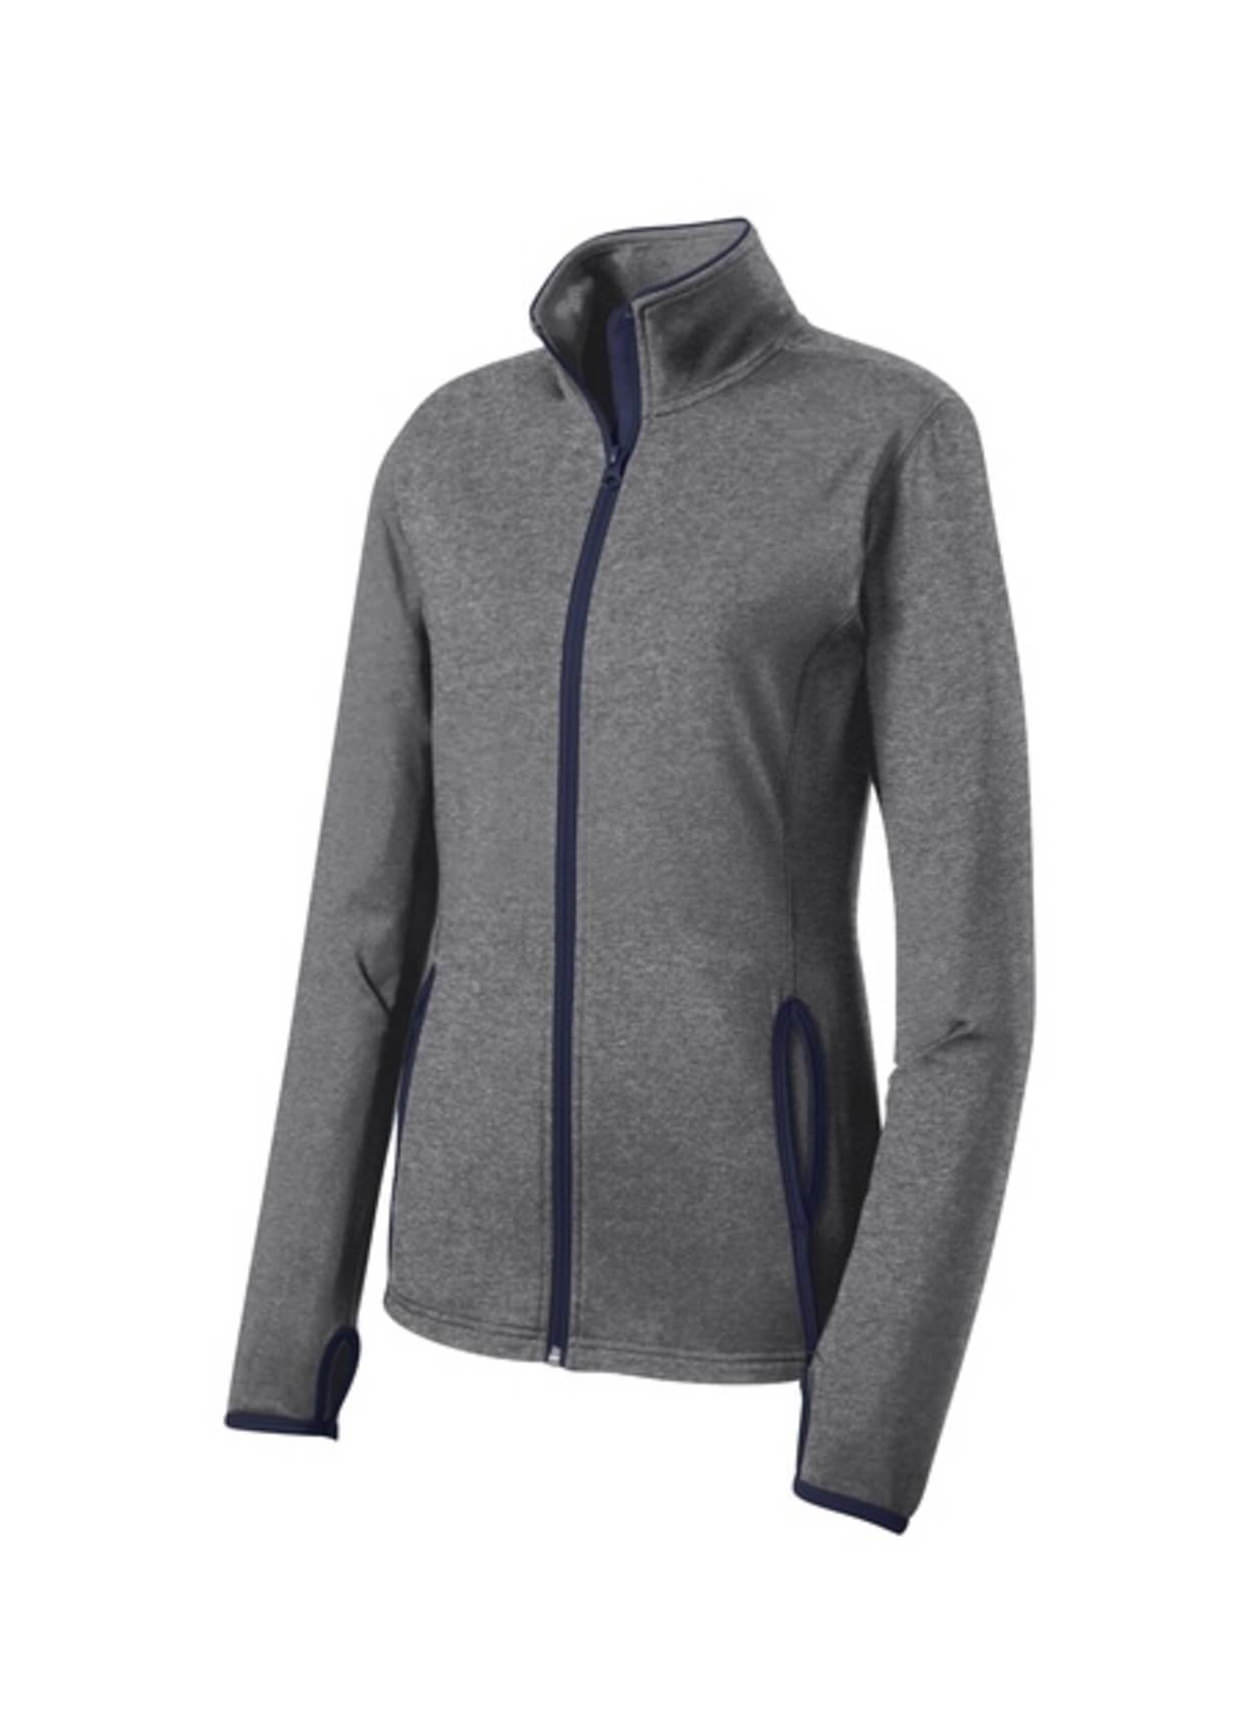 SPORT-TEK Women's Charcoal Grey Heather / True Navy Sport-Wick Stretch Contrast Jacket